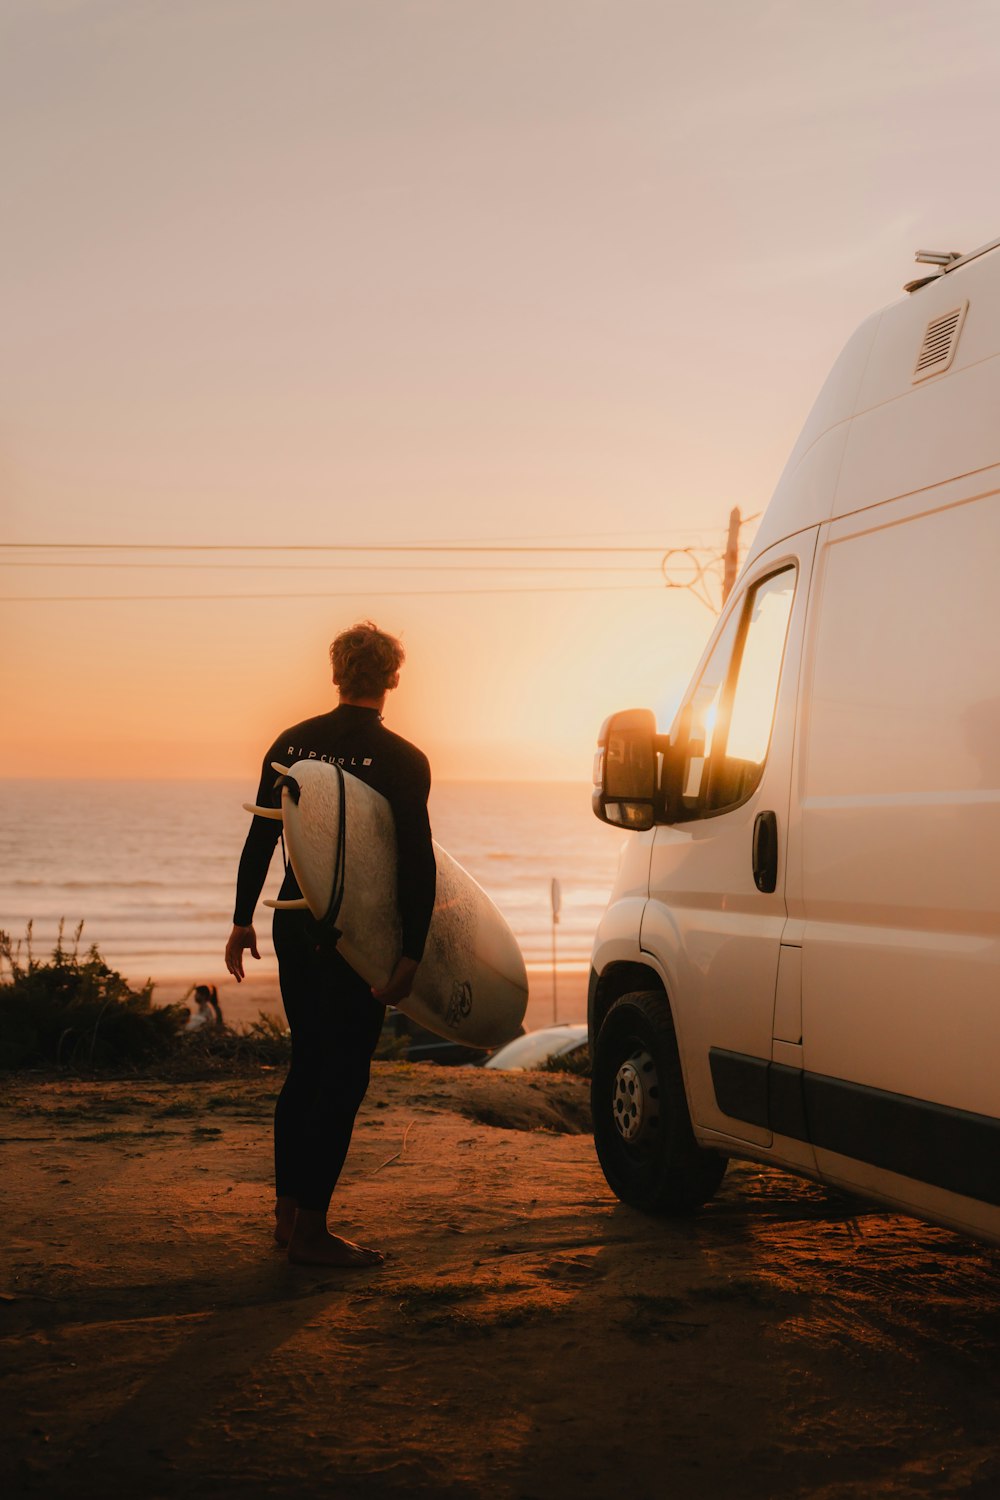 Un hombre que lleva una tabla de surf junto a una furgoneta